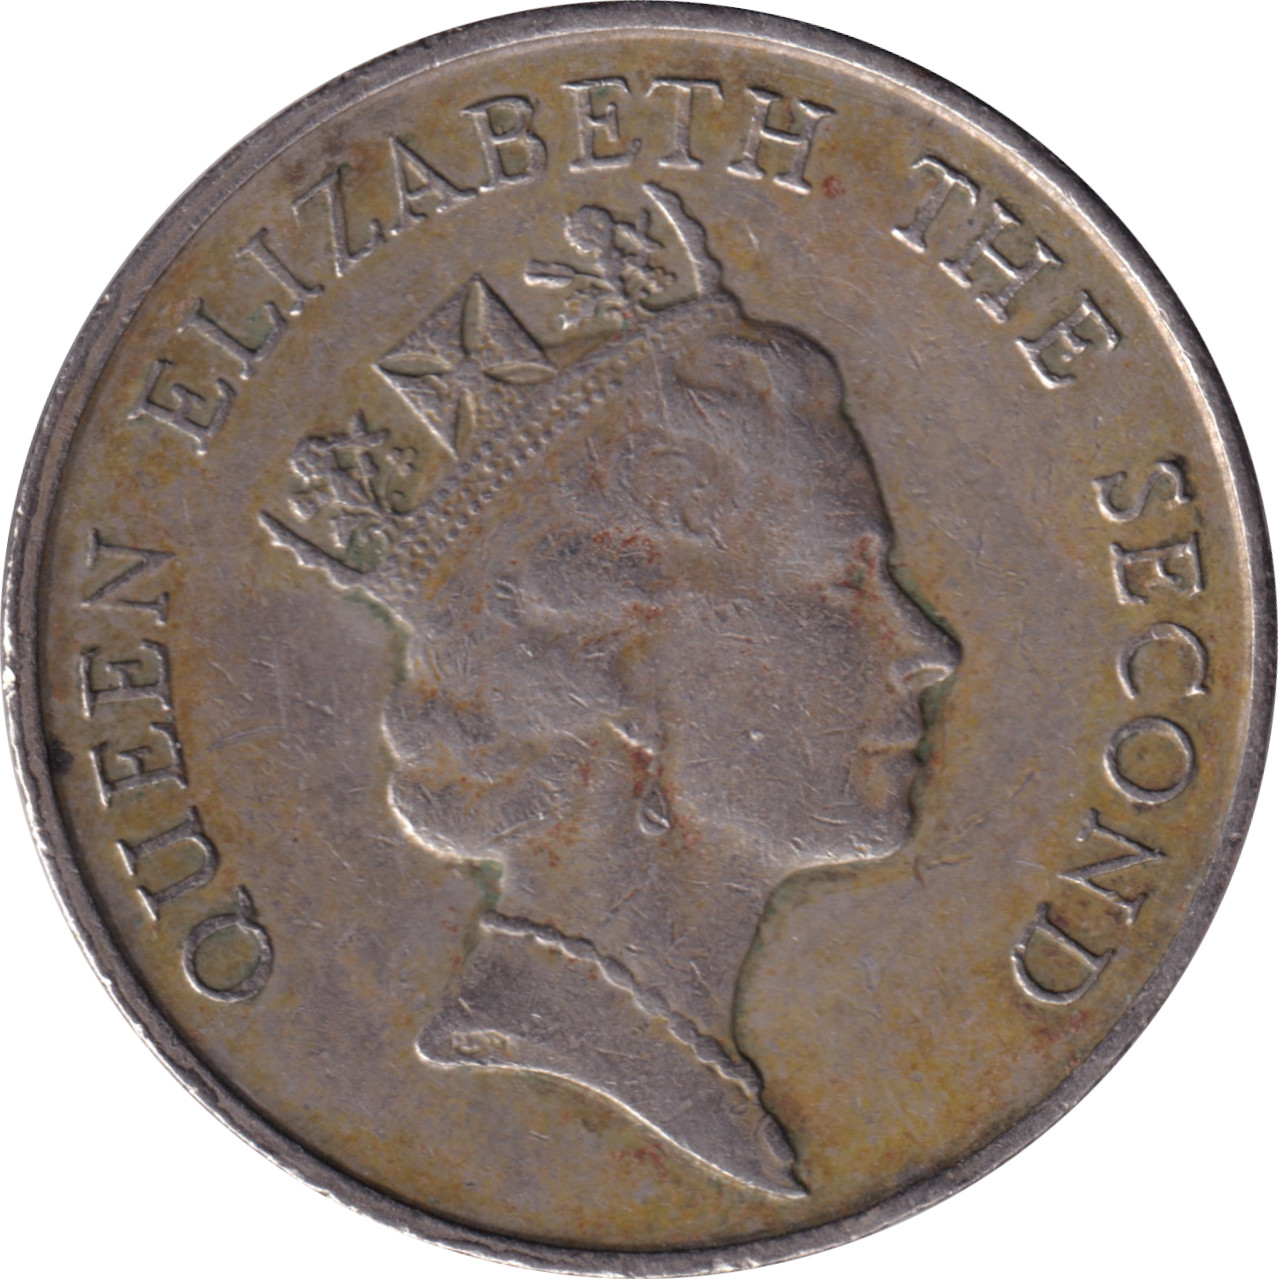 5 dollars - Elizabeth II - Mature head